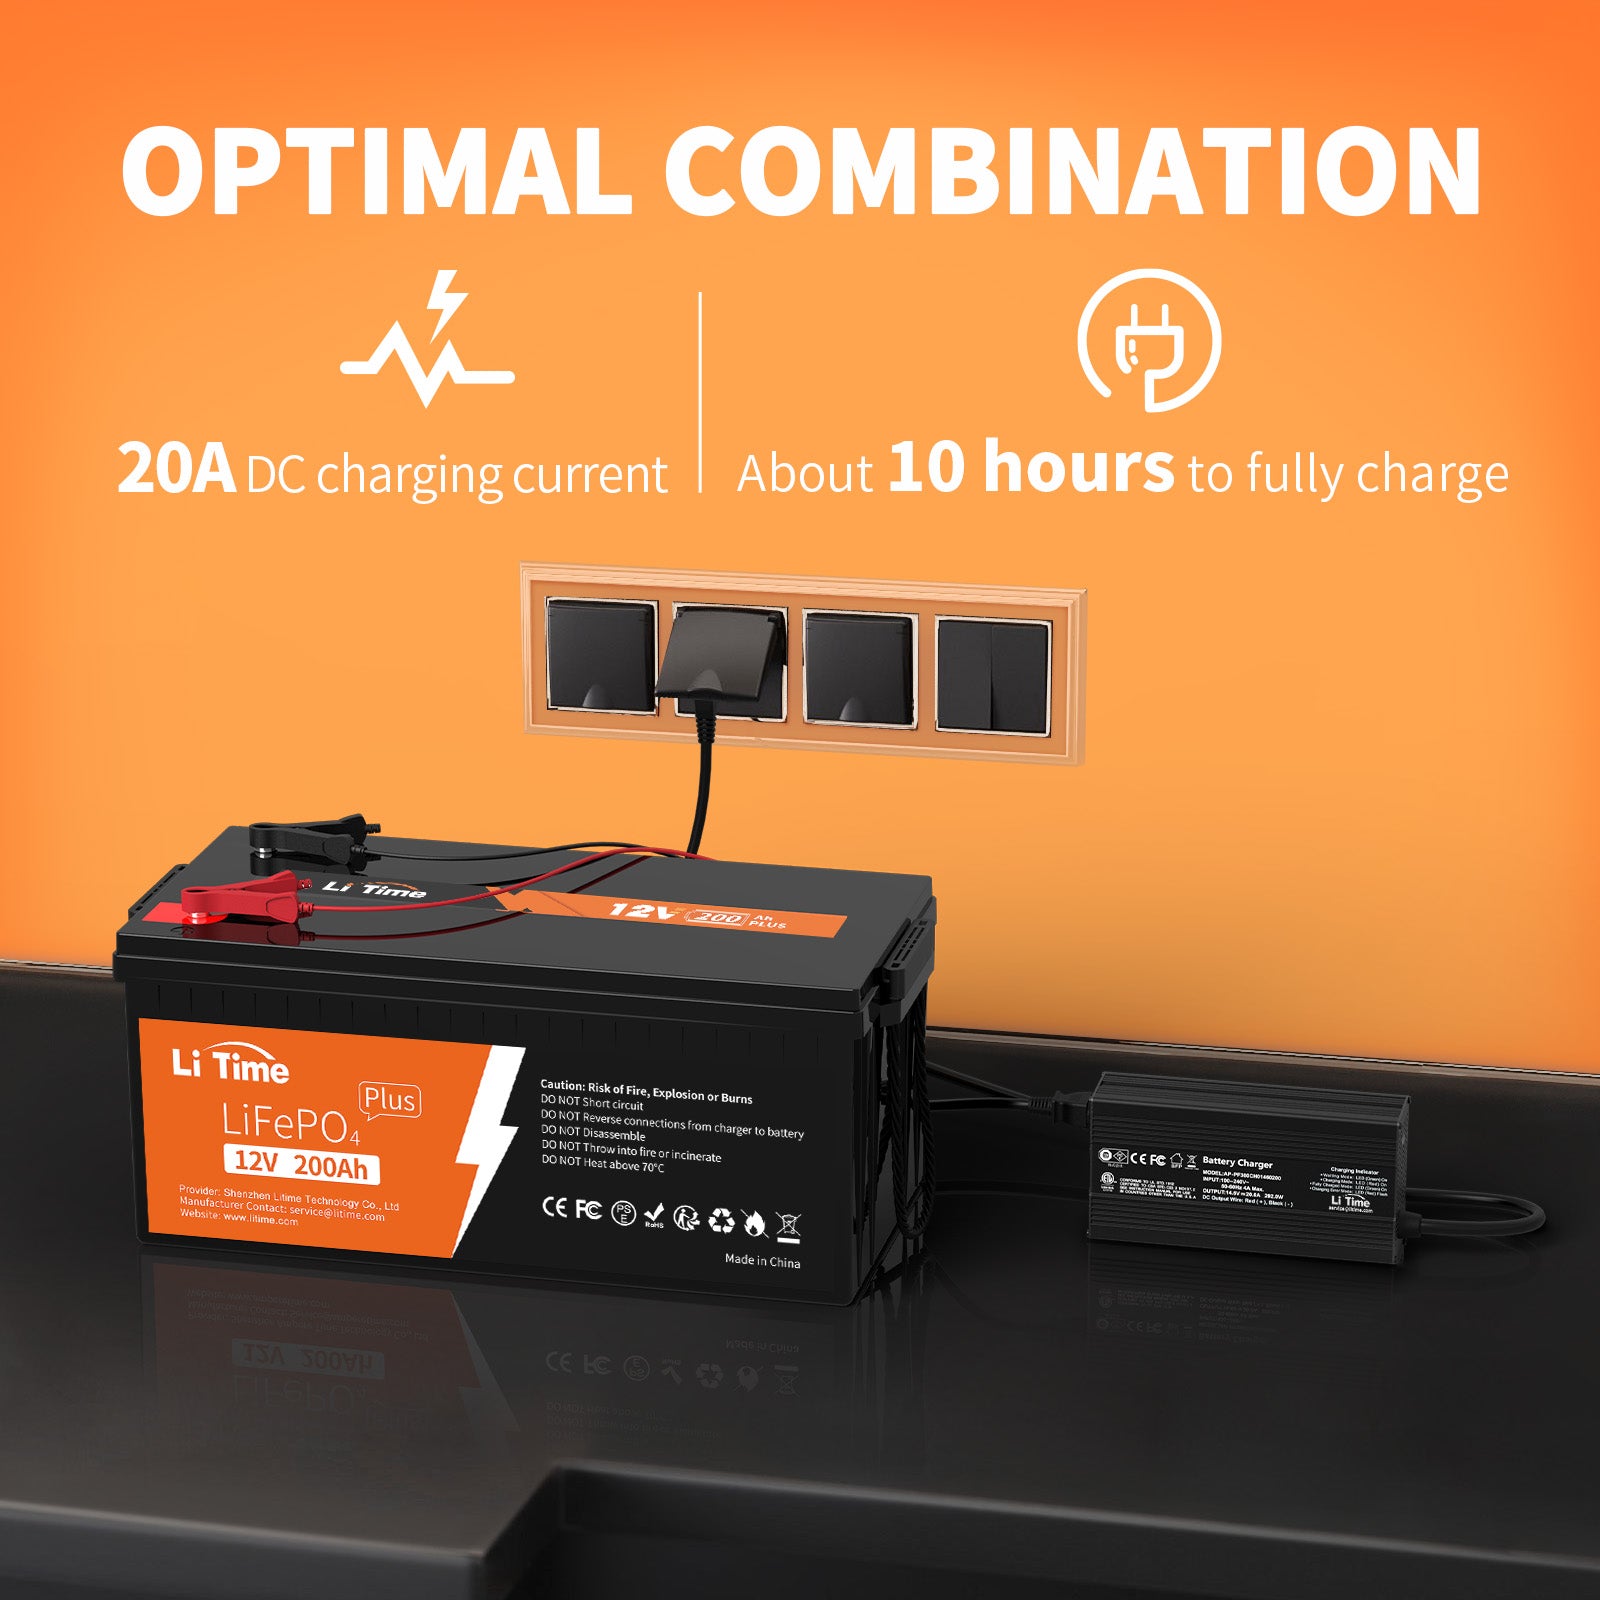 Li Time 12V 200Ah Plus LiFePO4 Battery + 14.6V 20A Dedicated Lithium Battery Charger